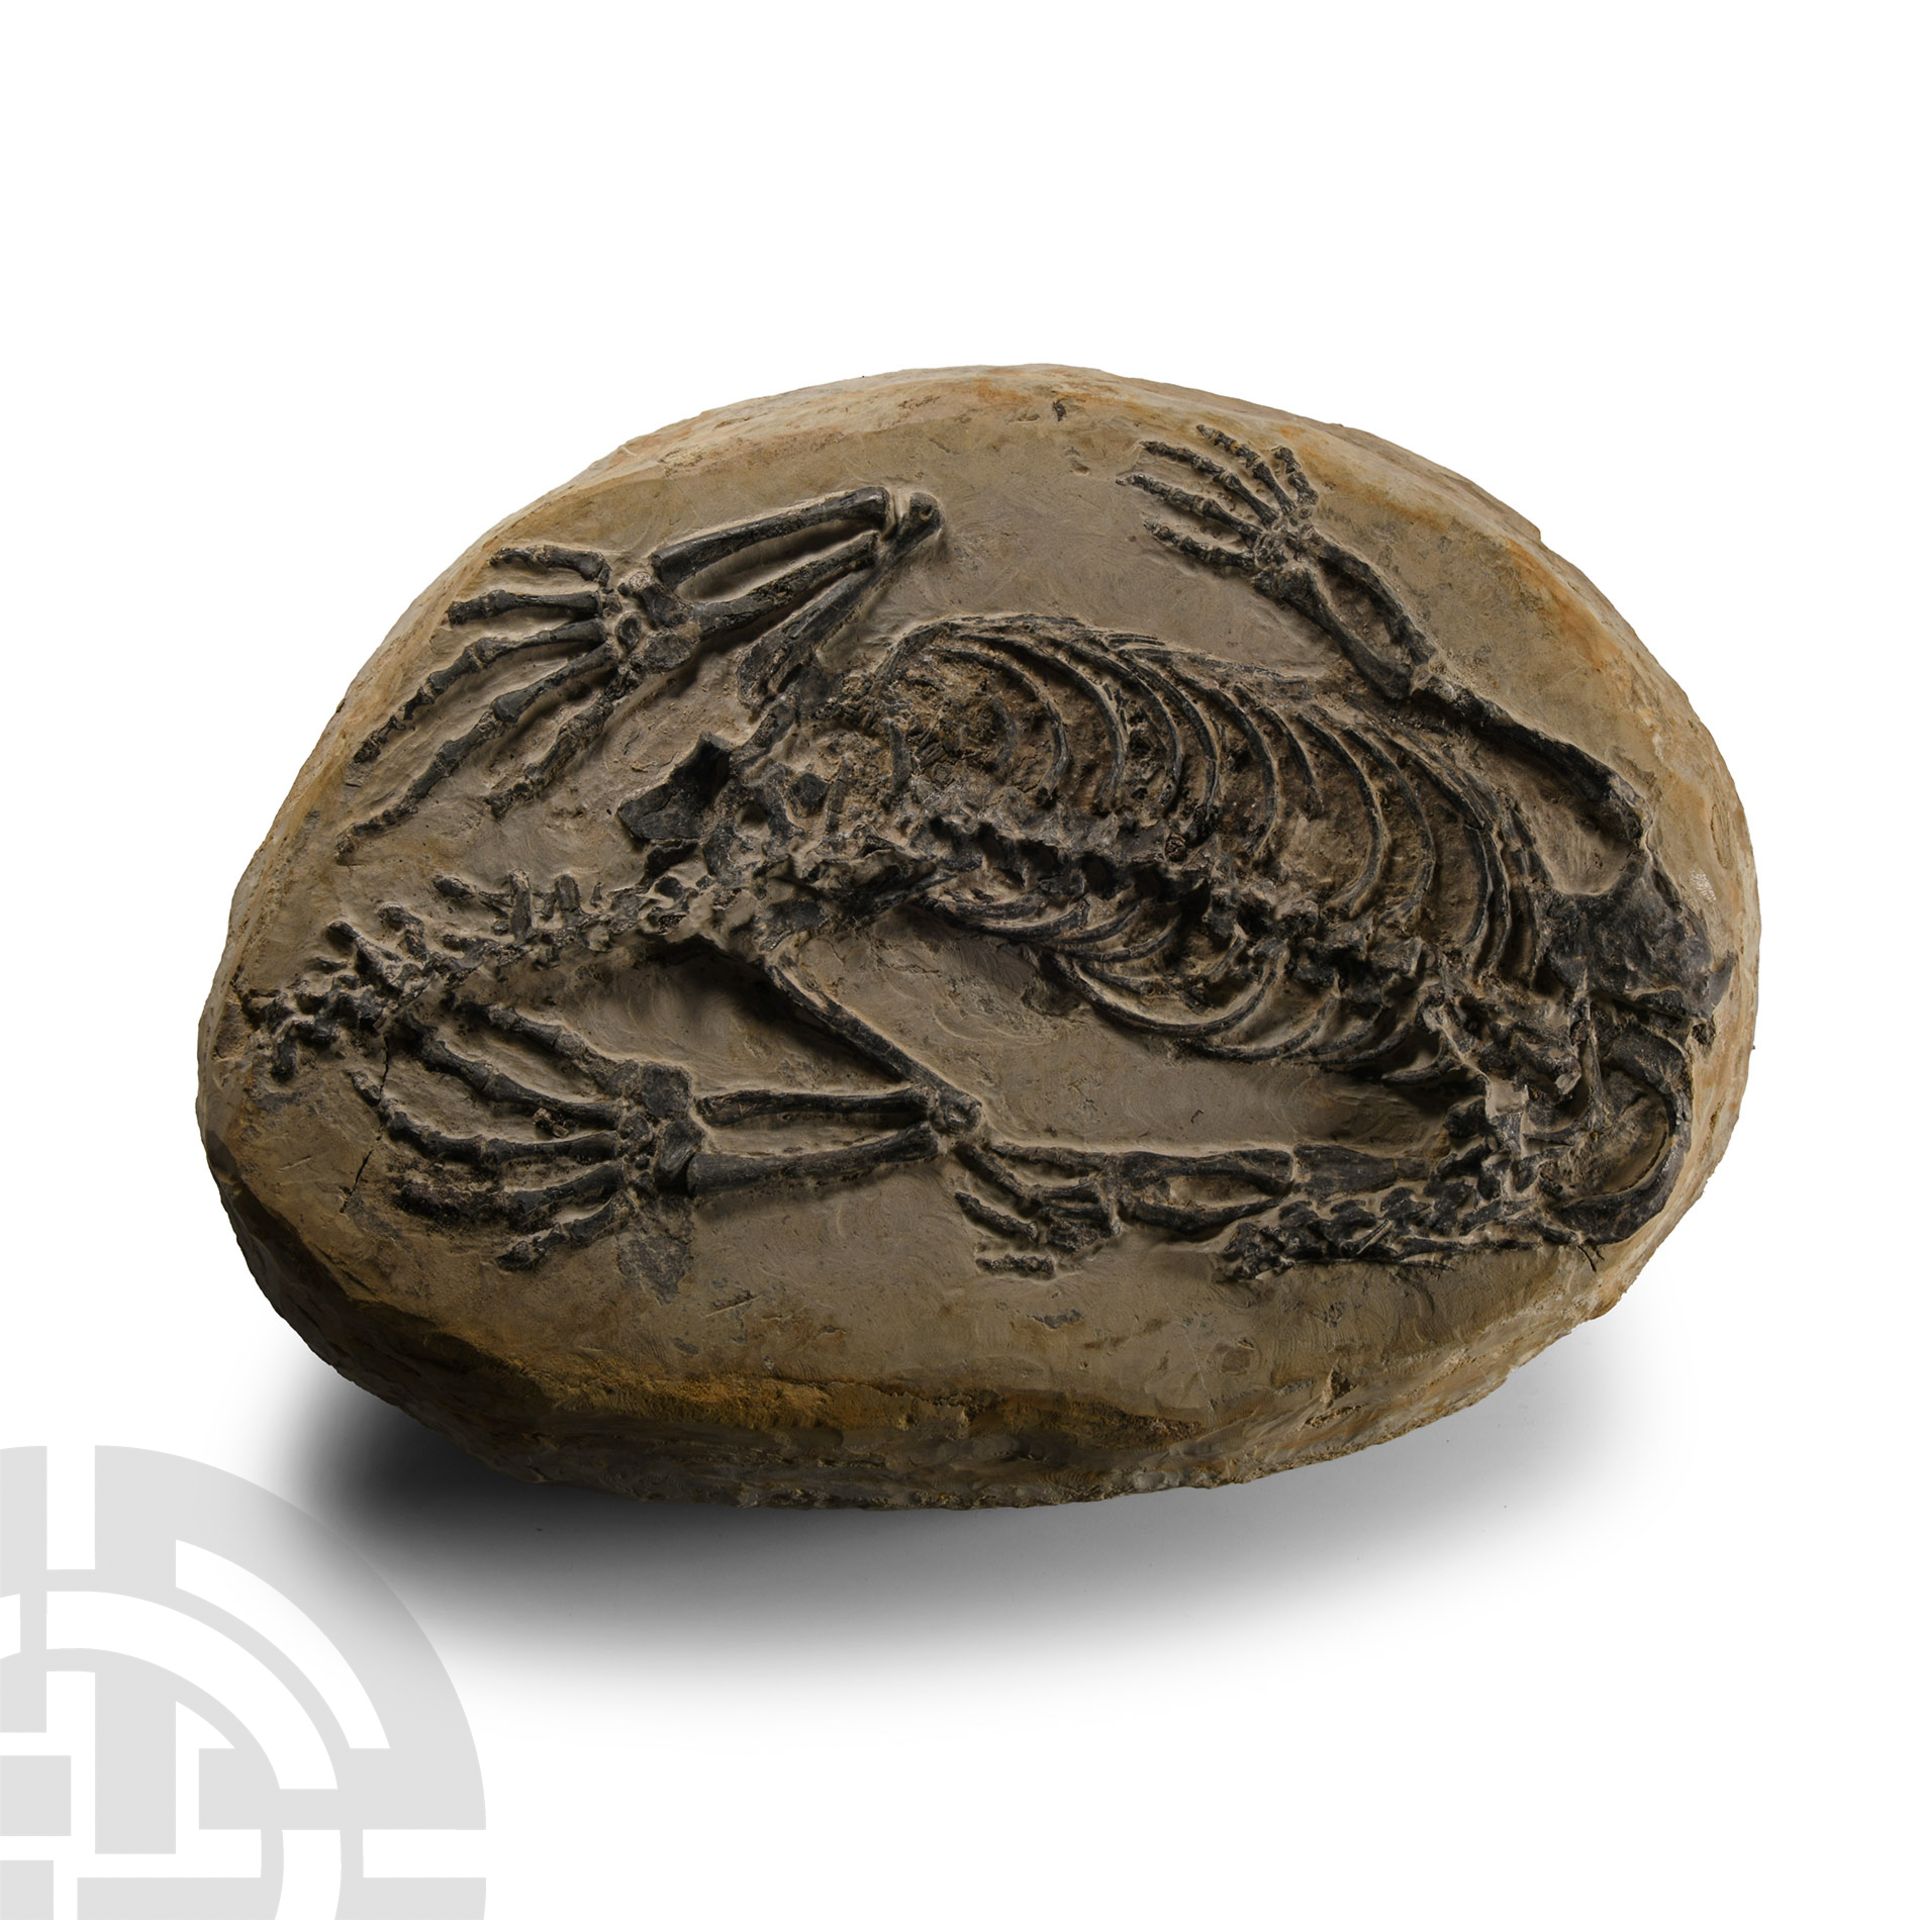 Natural History - Fossil Claudiosaurus Skeleton